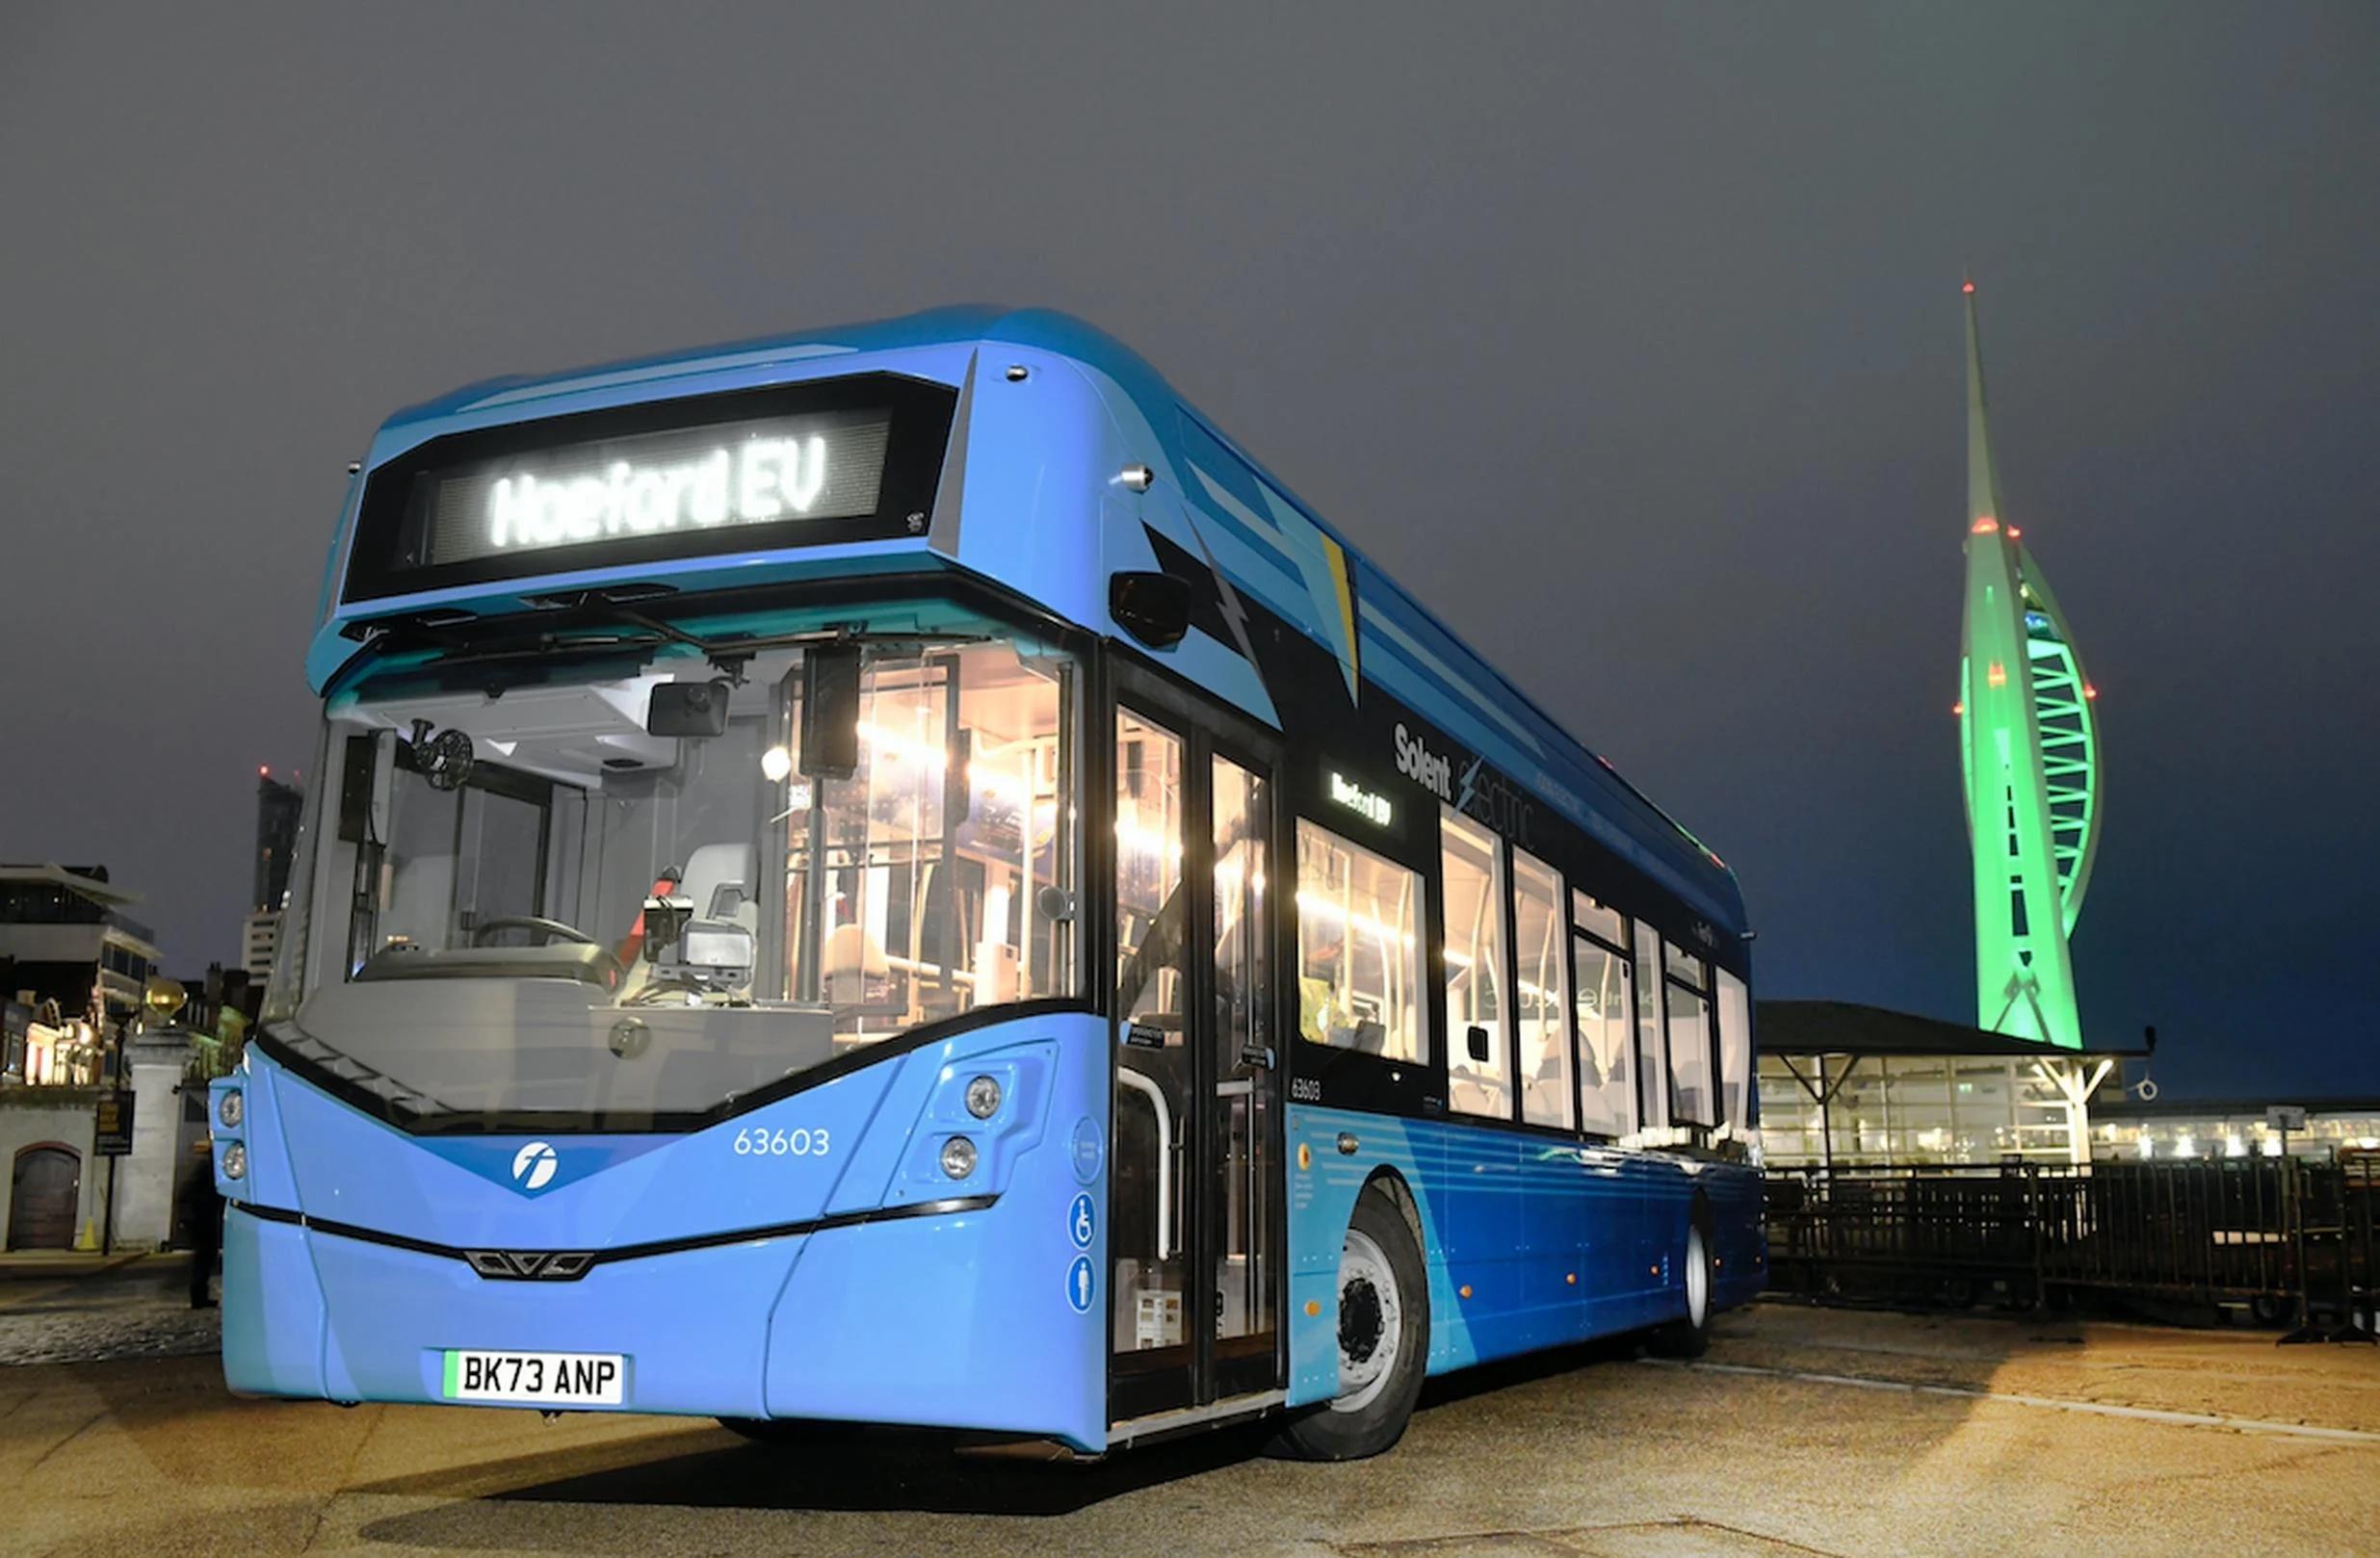 Electric buses join Solent fleet under £28m ZEBRA-backed partnership project